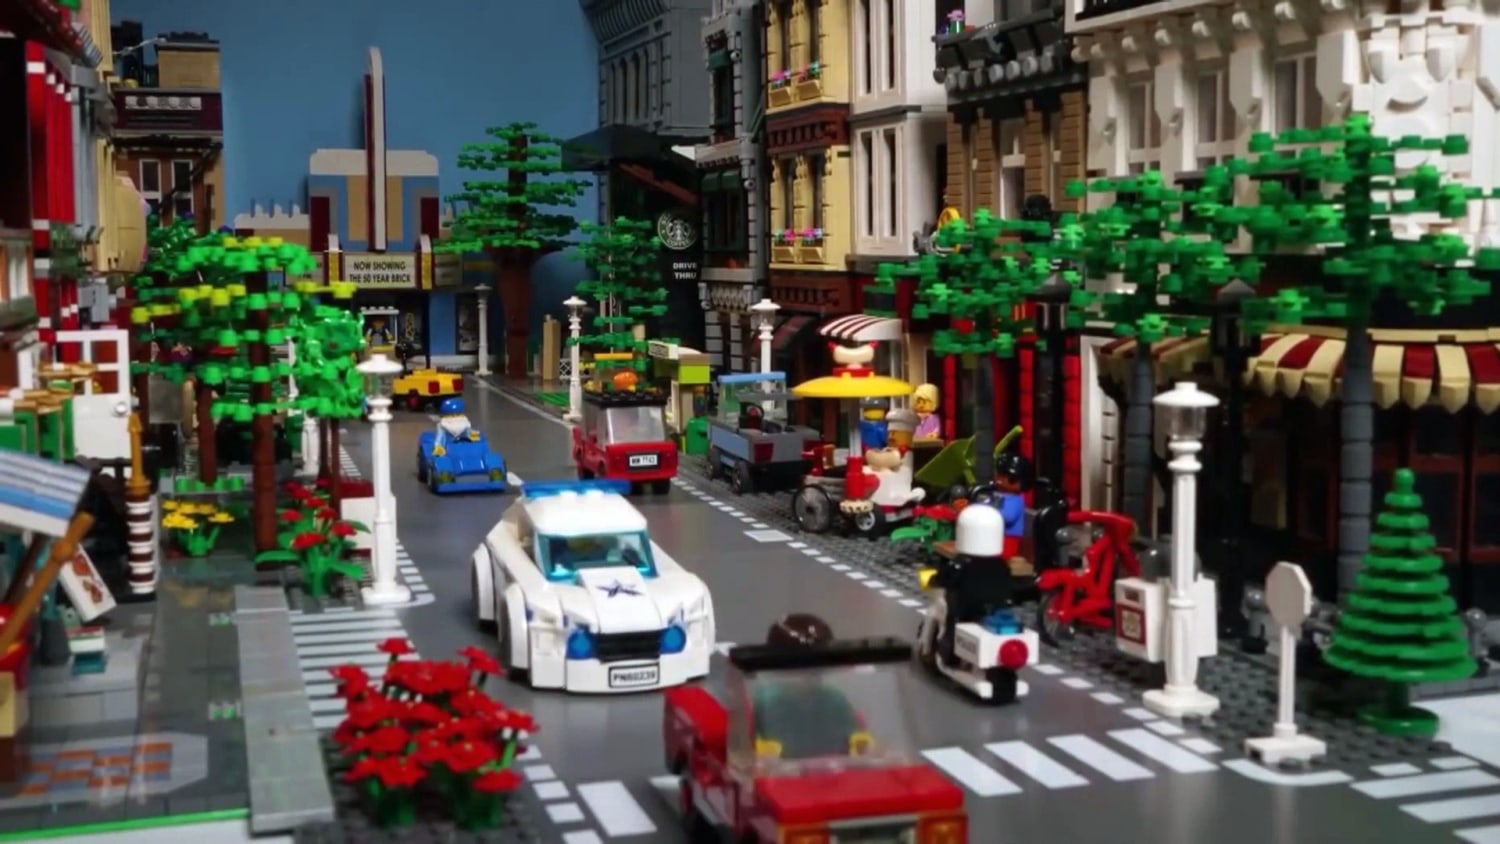 undskylde Kommunikationsnetværk Alabama Lego city used to explain Texas budget plans in creative video